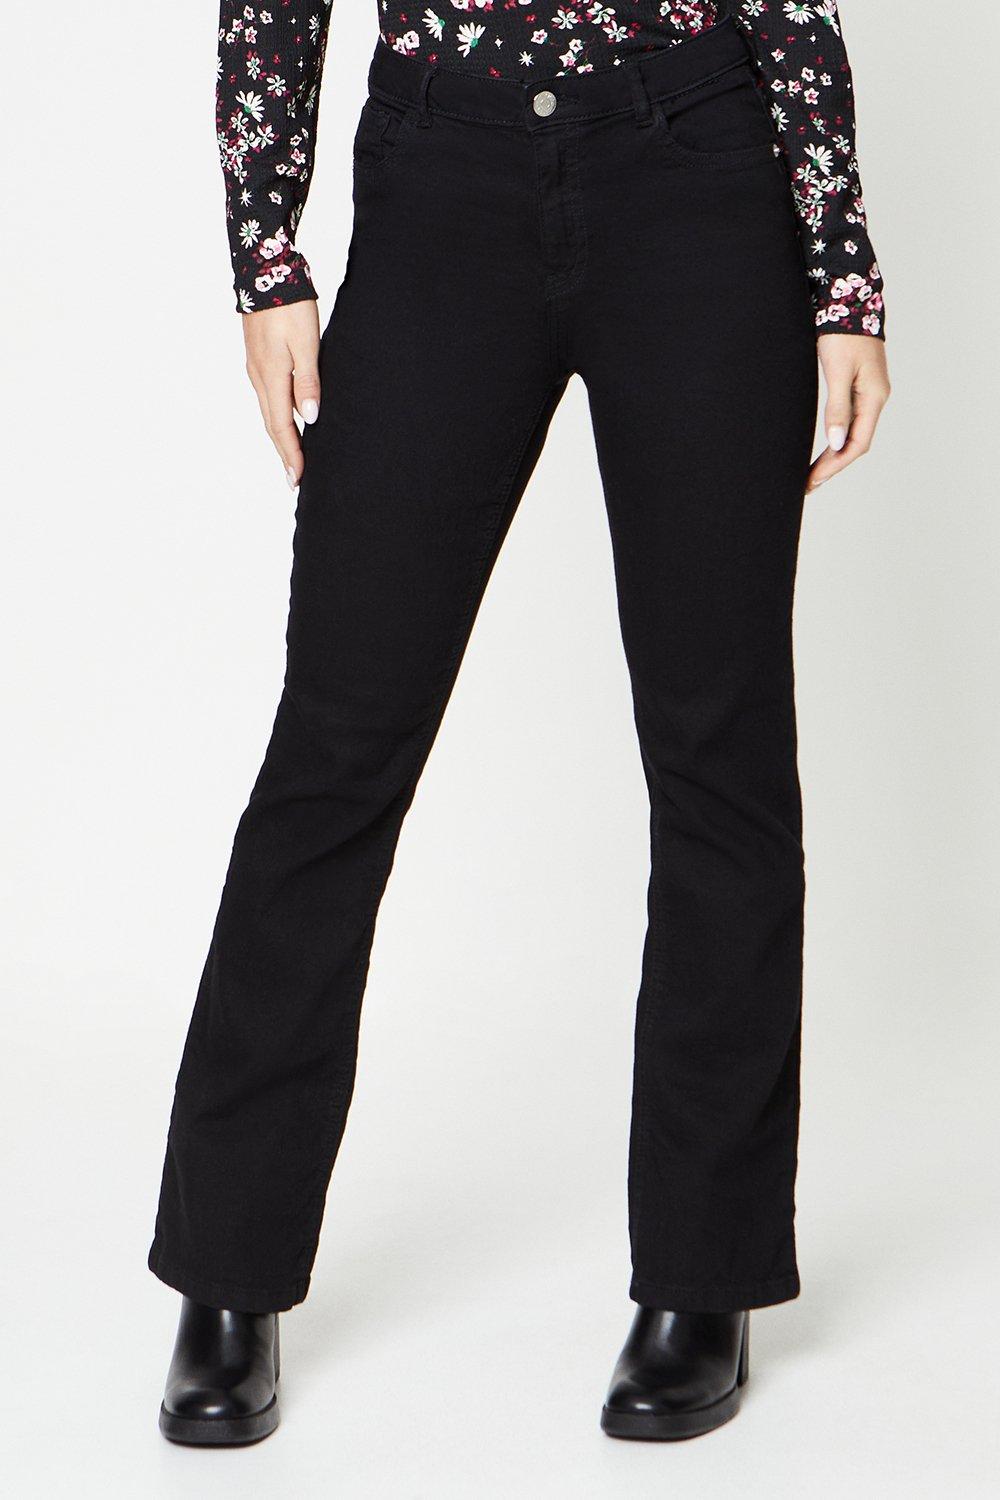 Women’s Petite Comfort Stretch Bootcut Jeans - black - 10